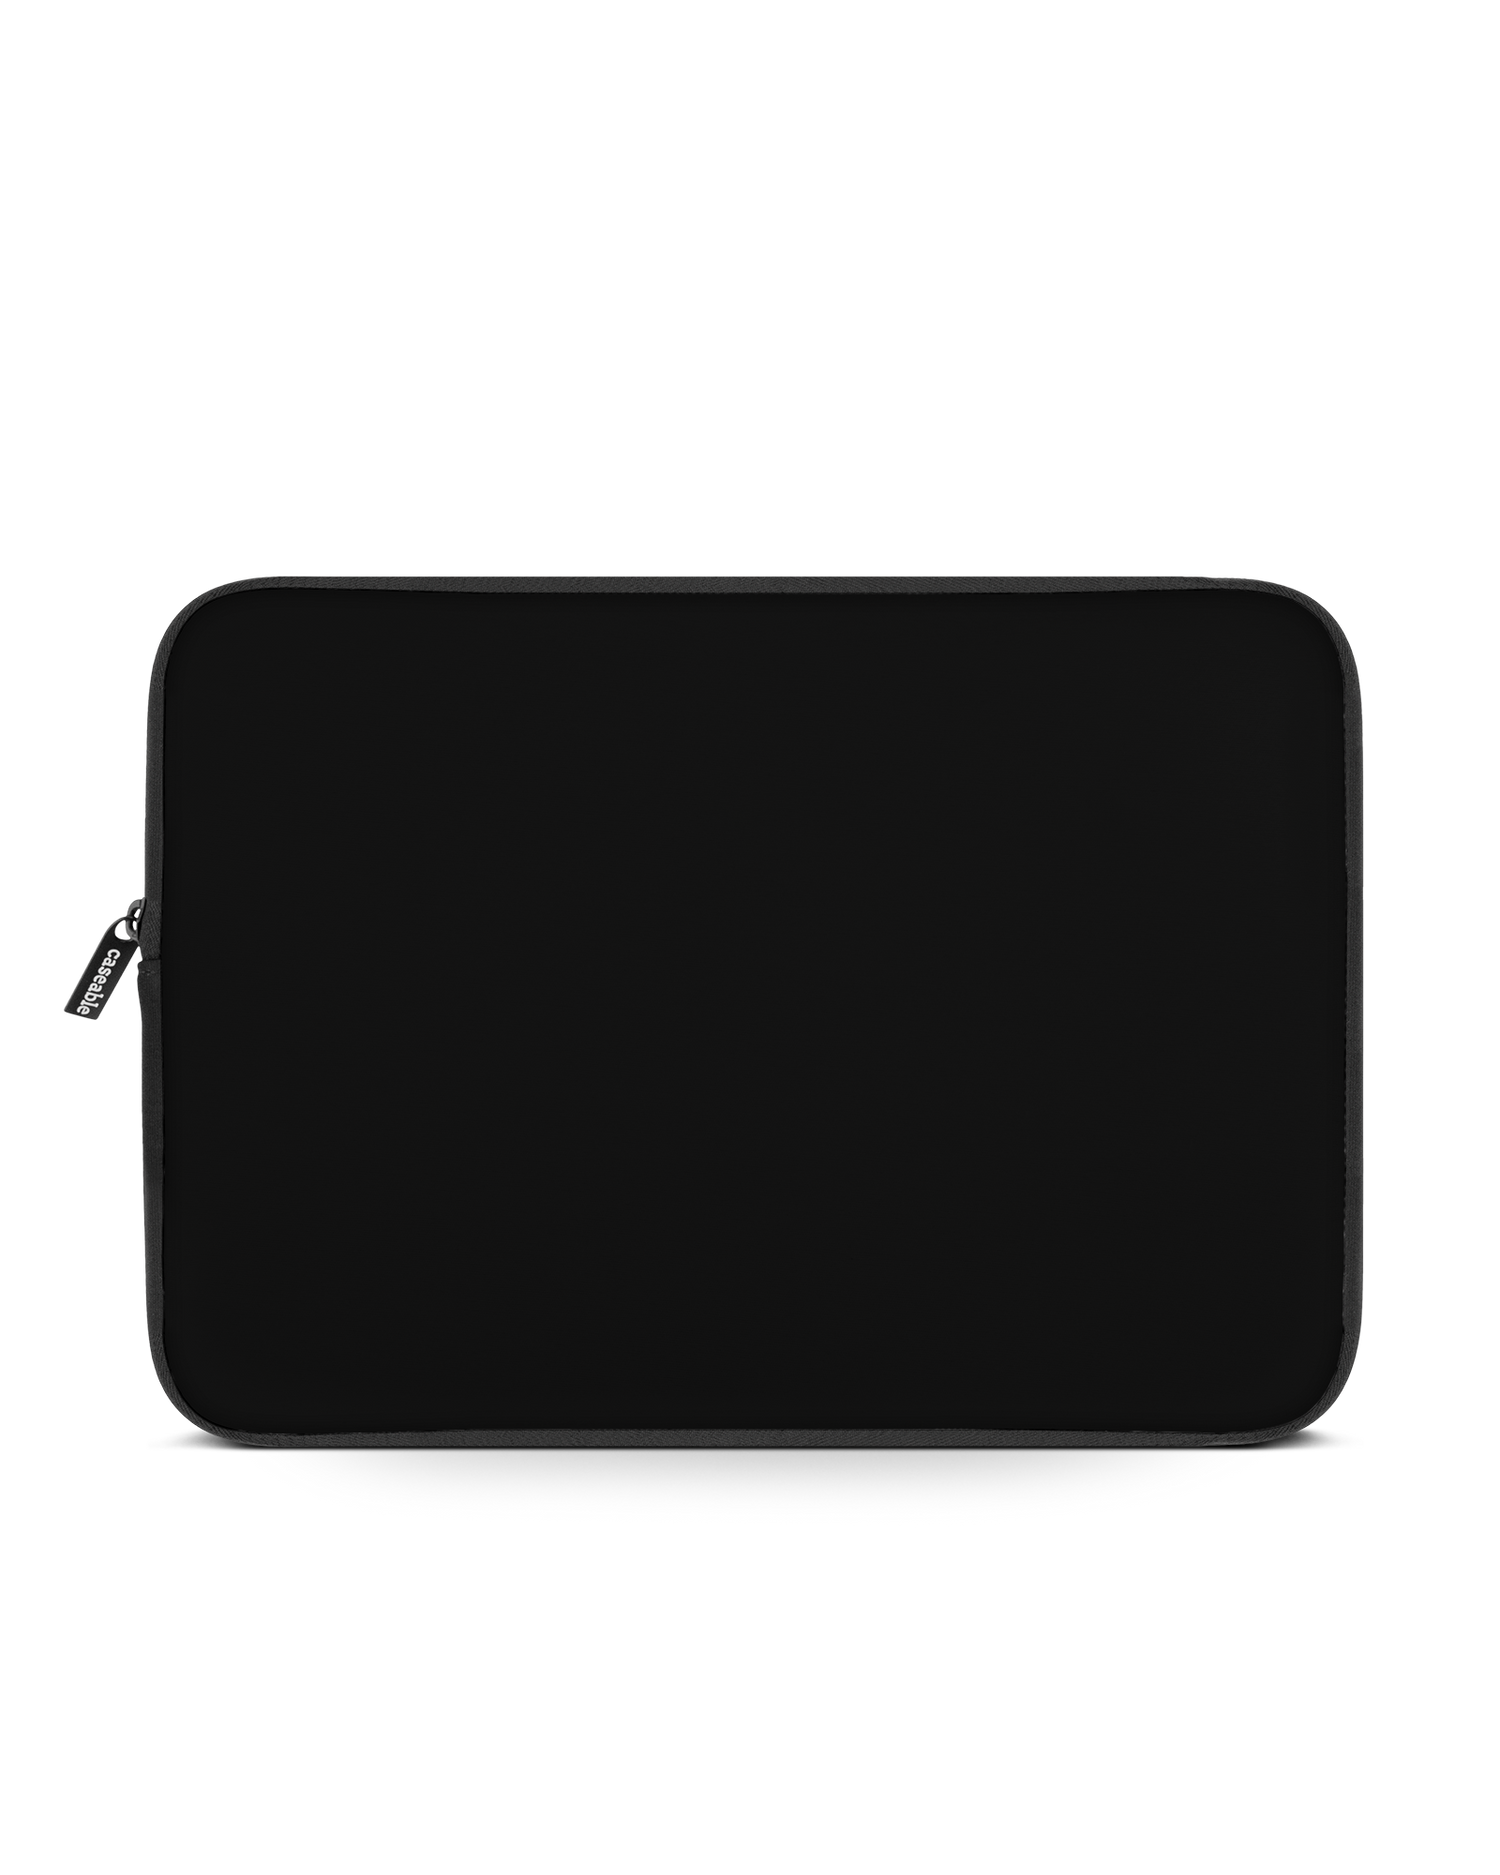 BLACK Laptop Case 16 inch: Front View